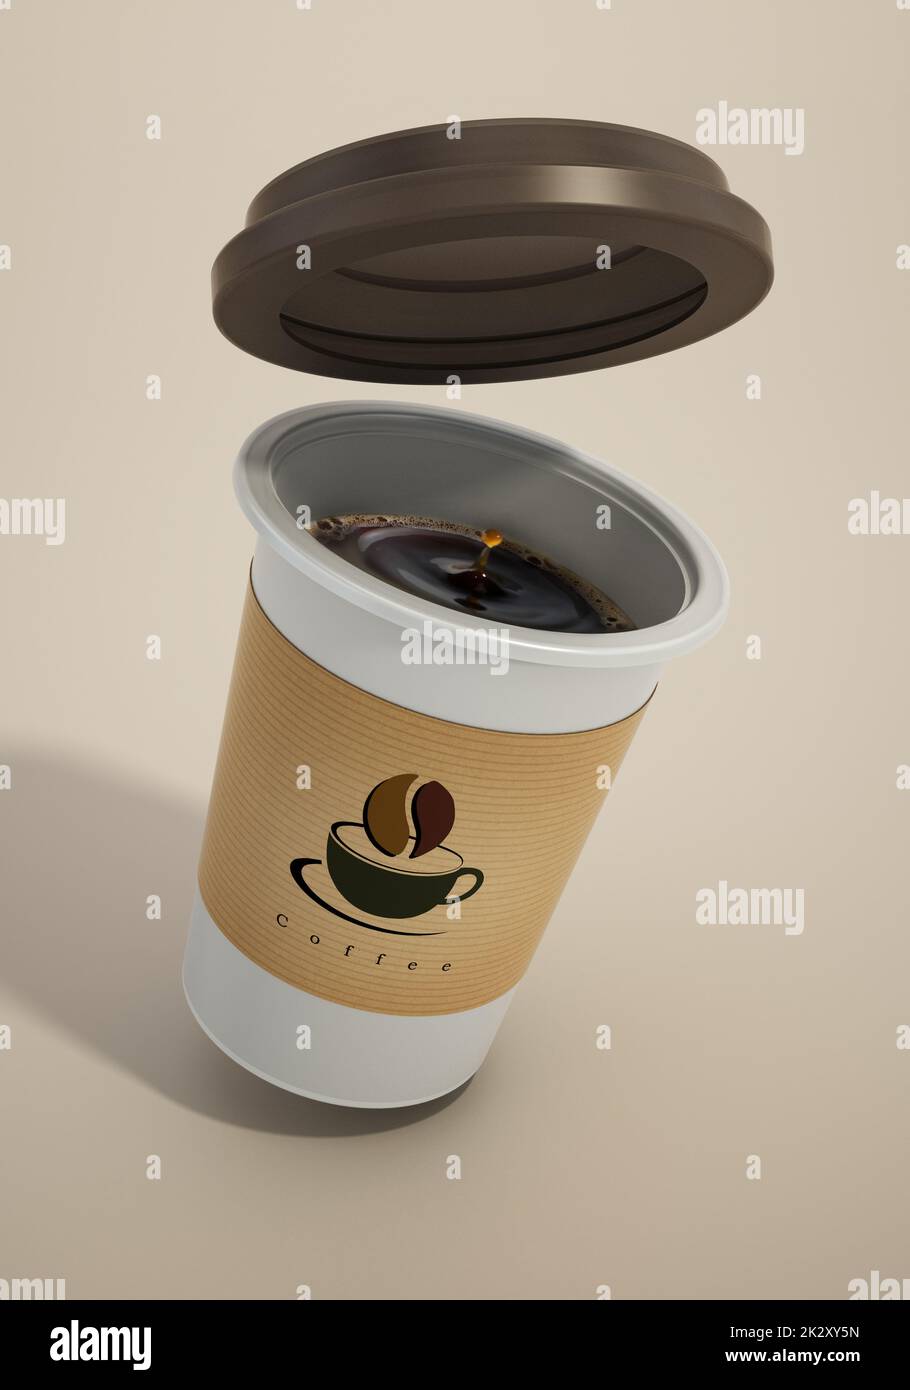 Ilustración de un agitador de café representación 3d de un